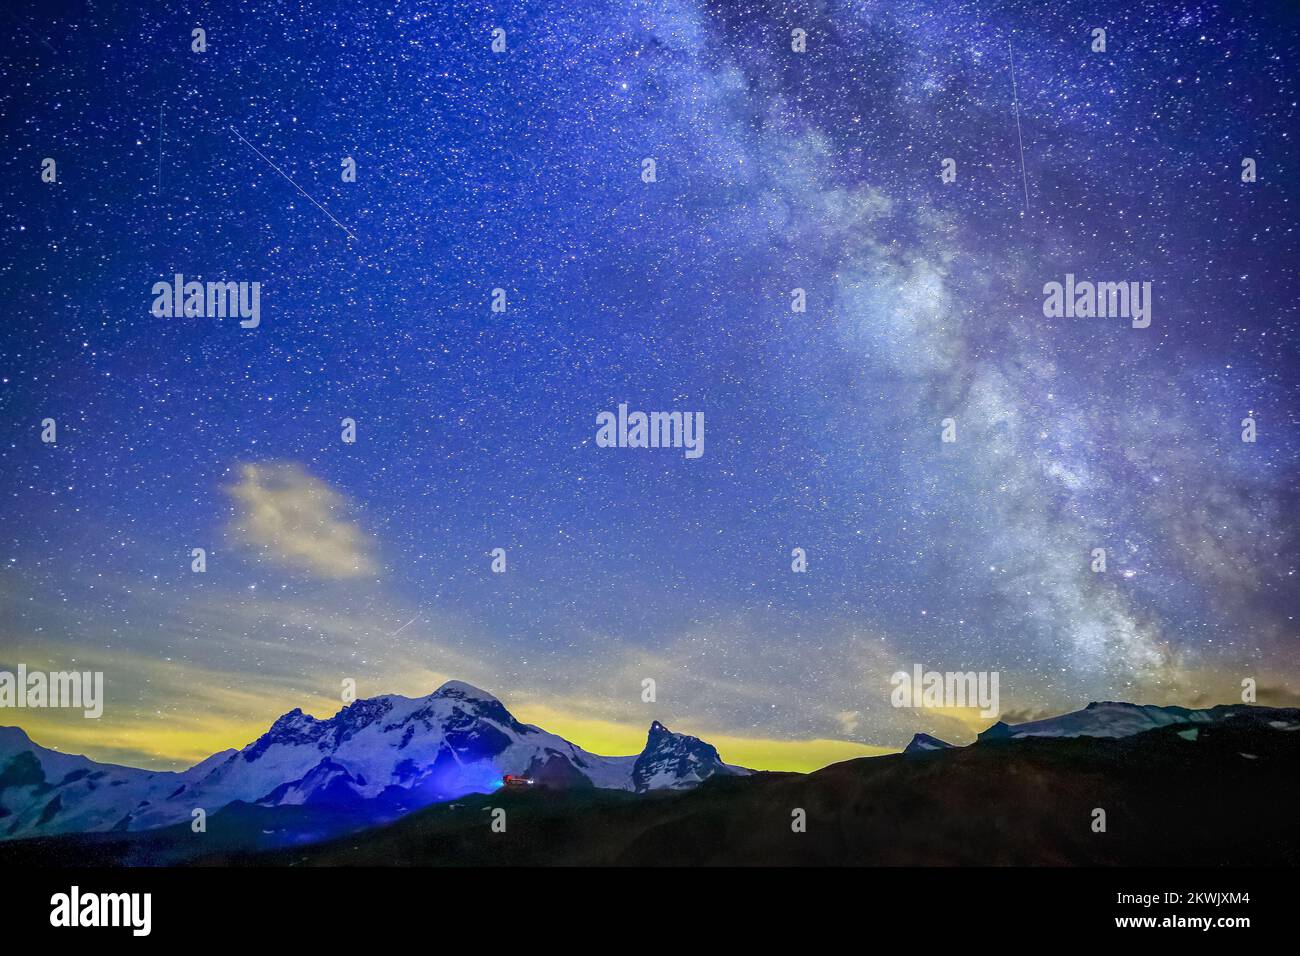 Milky Way galaxy above Matterhorn, Swiss Alps at night Stock Photo